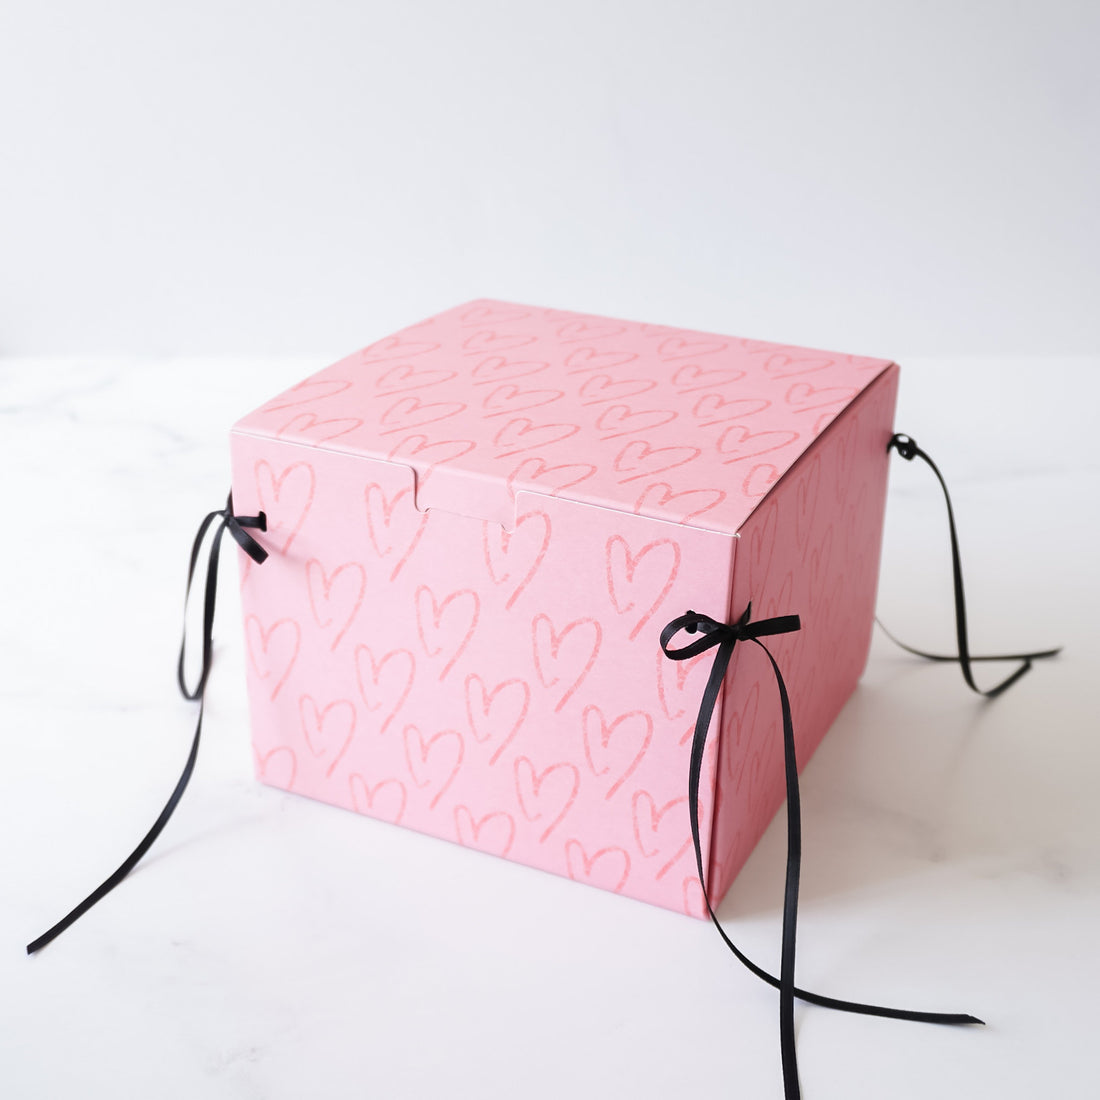 heart printed bakery box with black ribbon